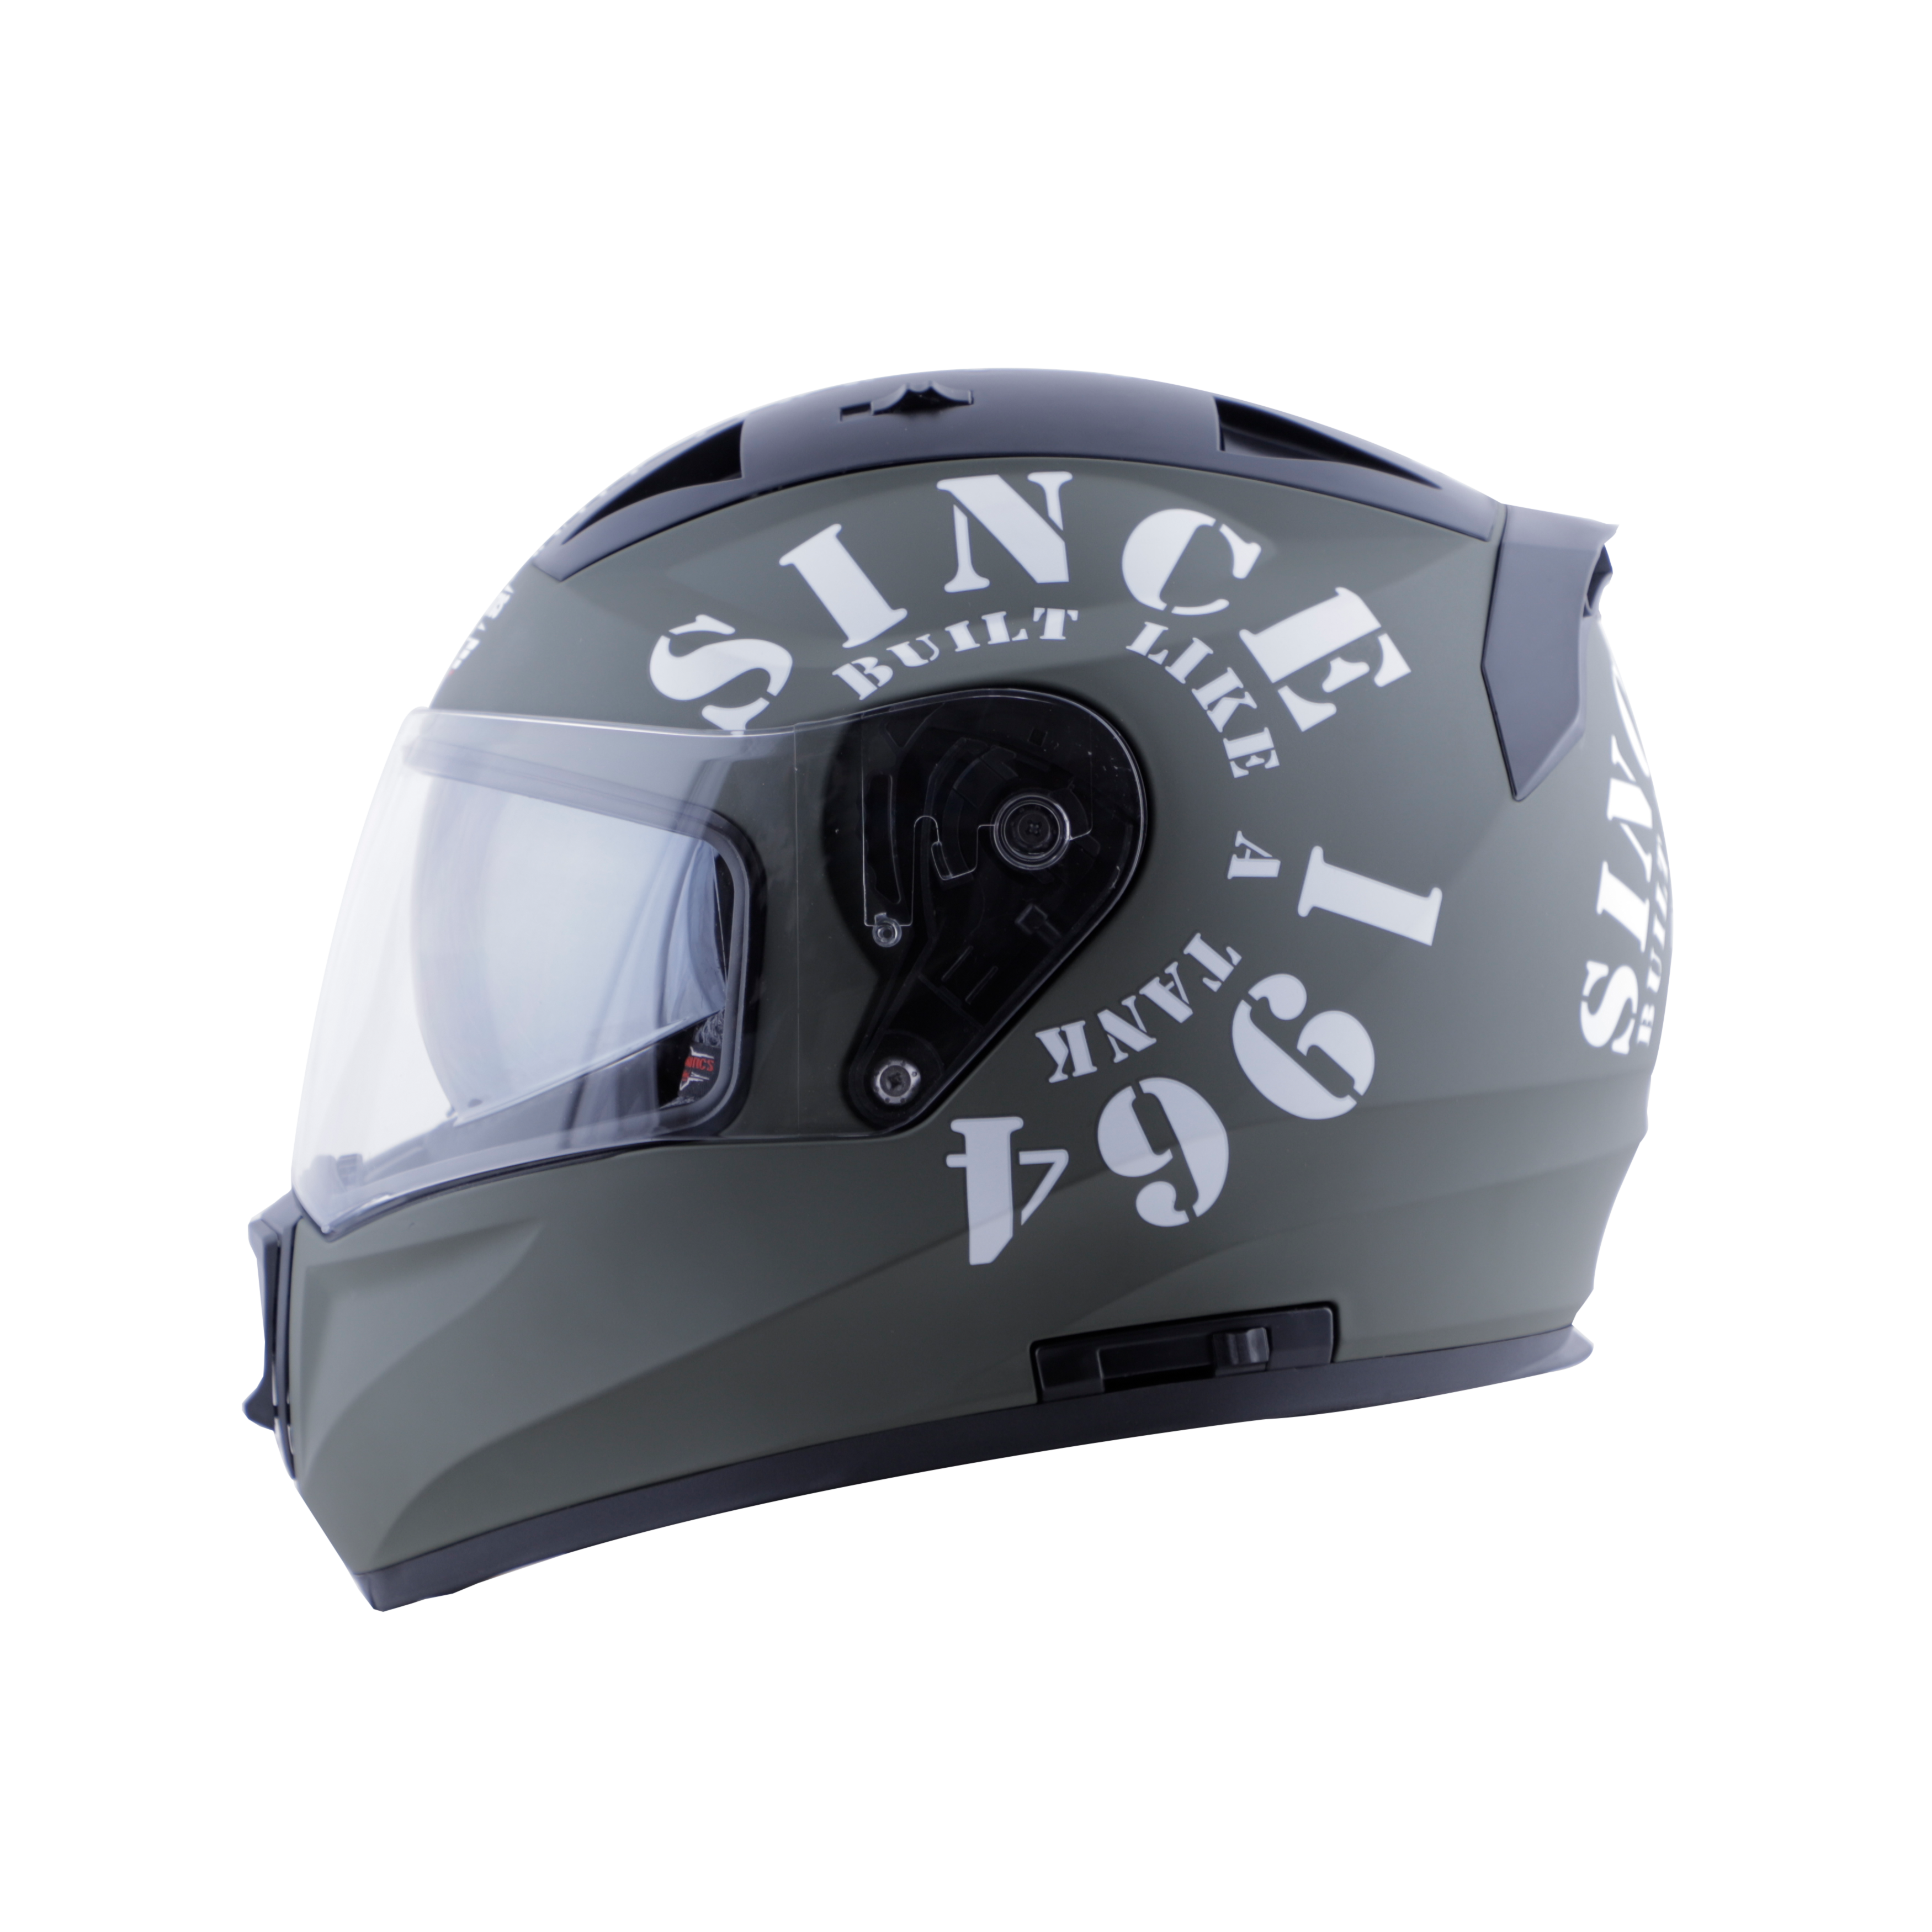 Steelbird SA-1 Aeronautics Tank ISI Certified Helmet With Chrome Silver Sun Shield (Matt Battle Green White)